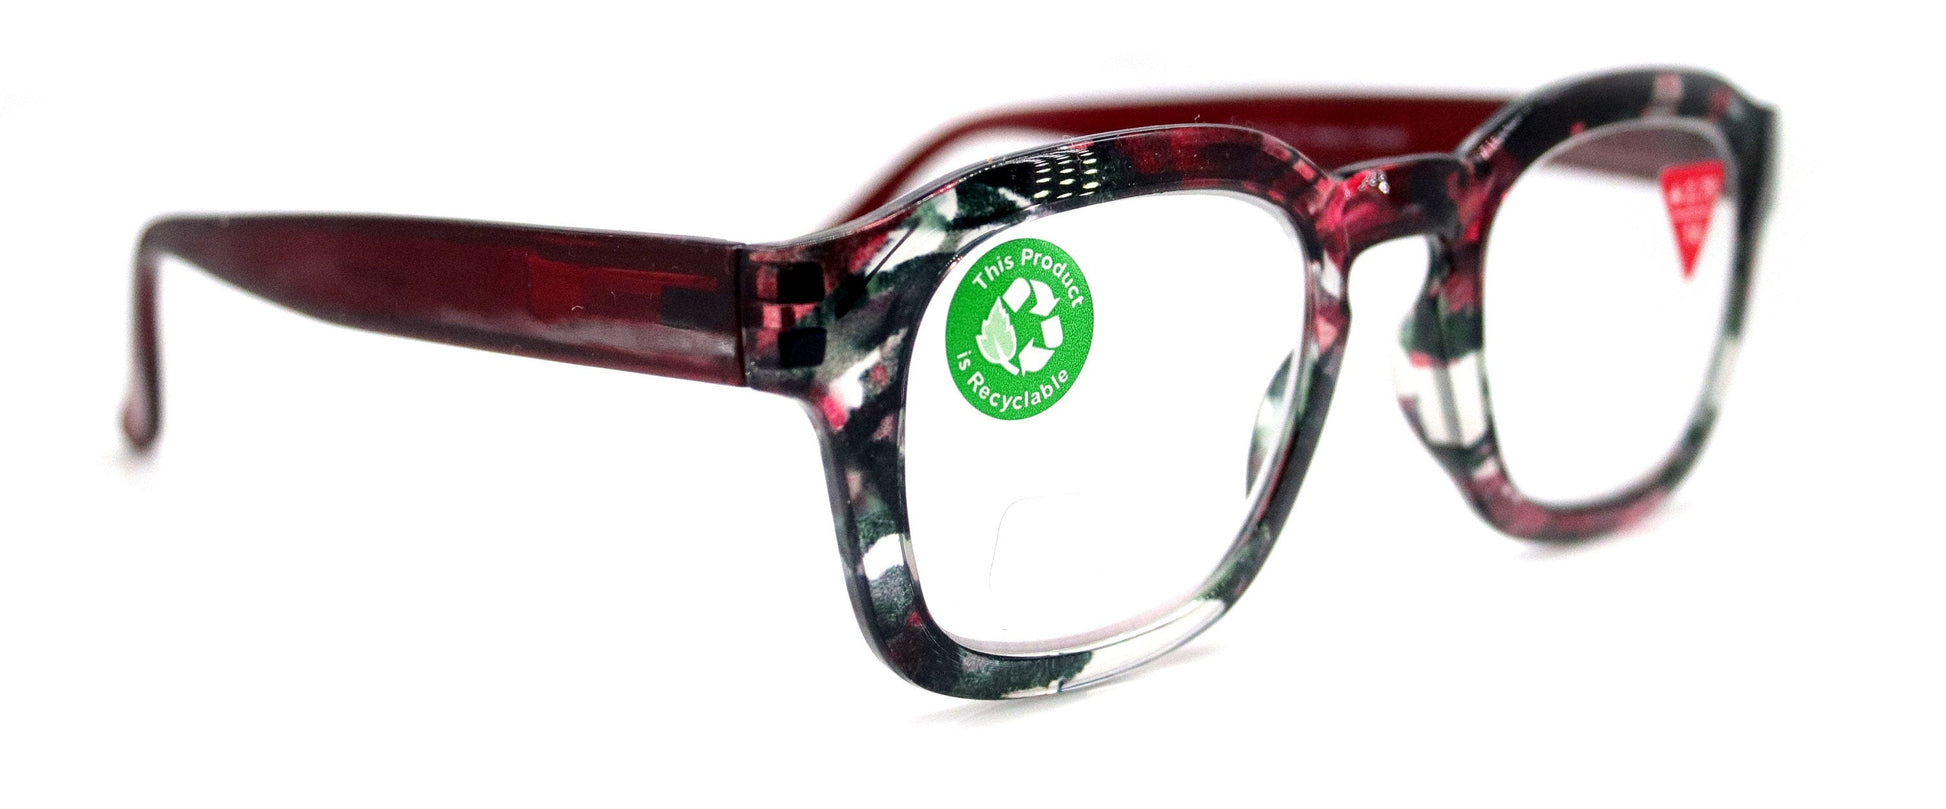 Sasha, (Premium) Reading Glasses, High End Readers +1.25..+3 Magnifying Eyeglasses (Black n Red) Camo Square Optical Frames NY Fifth Avenue